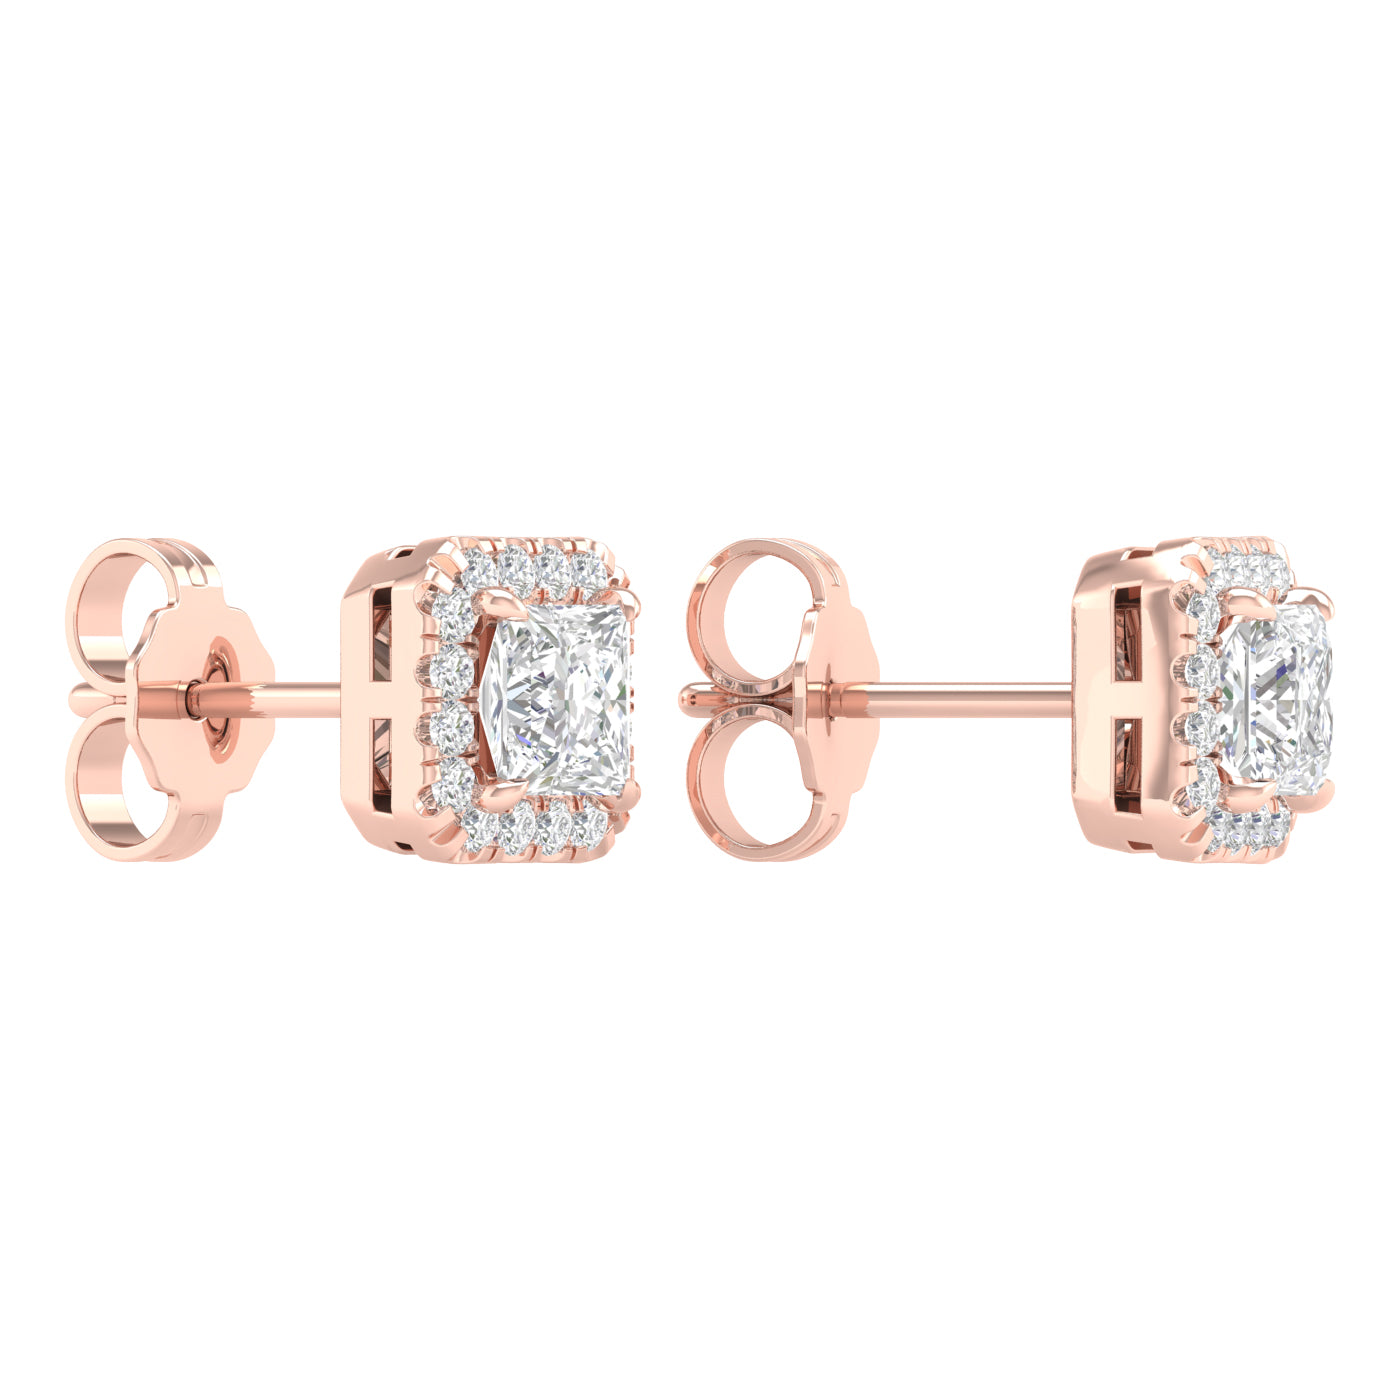 1.15 Carat Princess Lab Grown Diamond 14K Gold Halo Stud Earrings